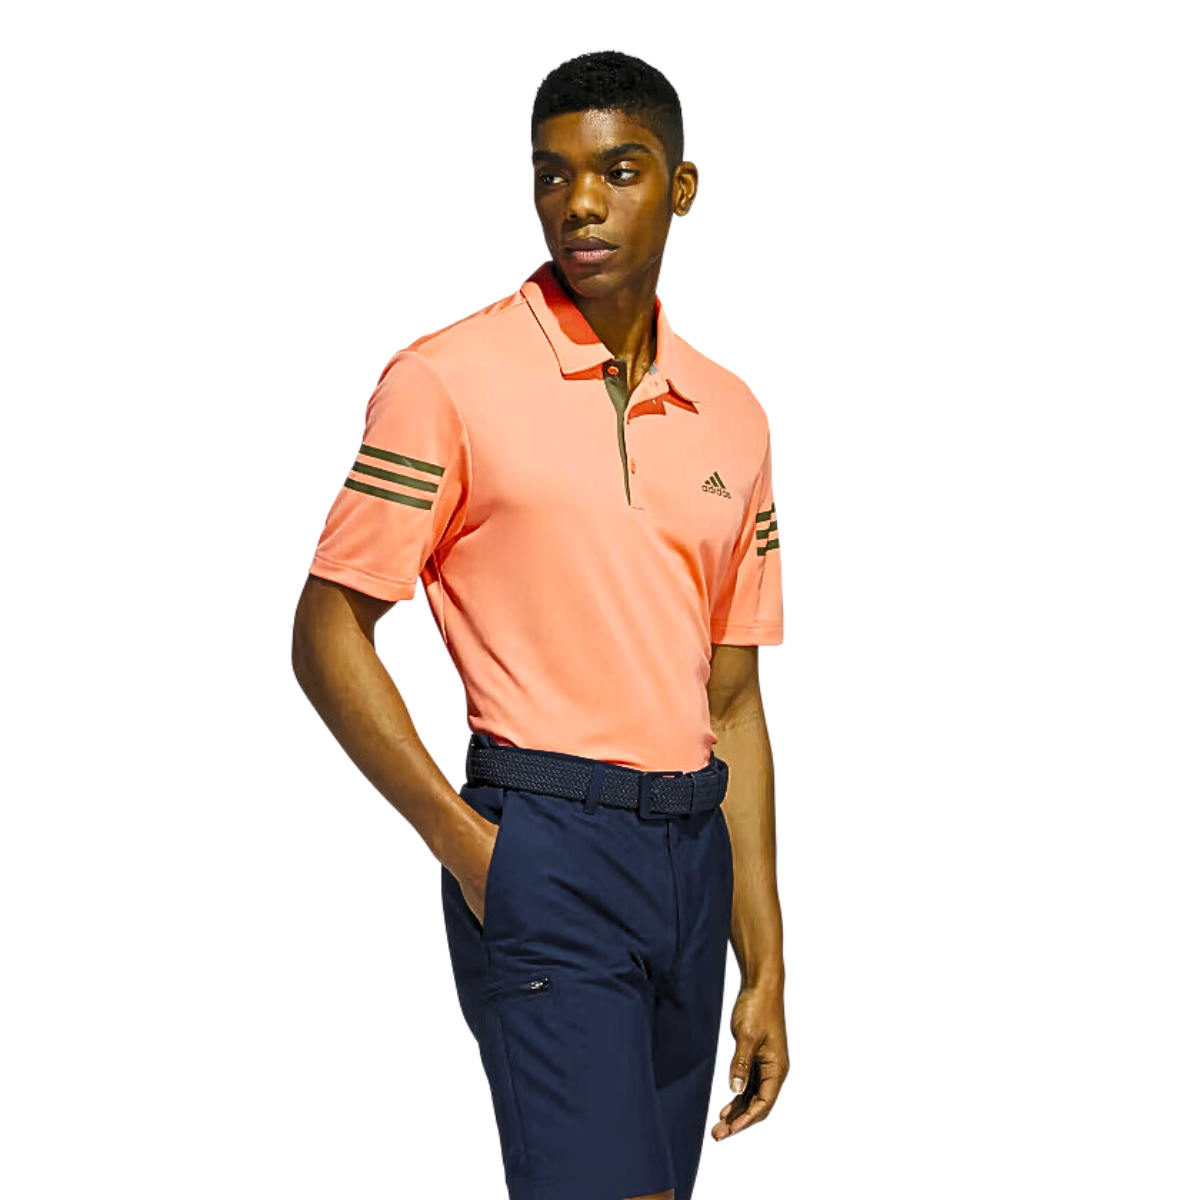 Adidas Men's 3 Stripes Golf Polo T-Shirt (US Size)